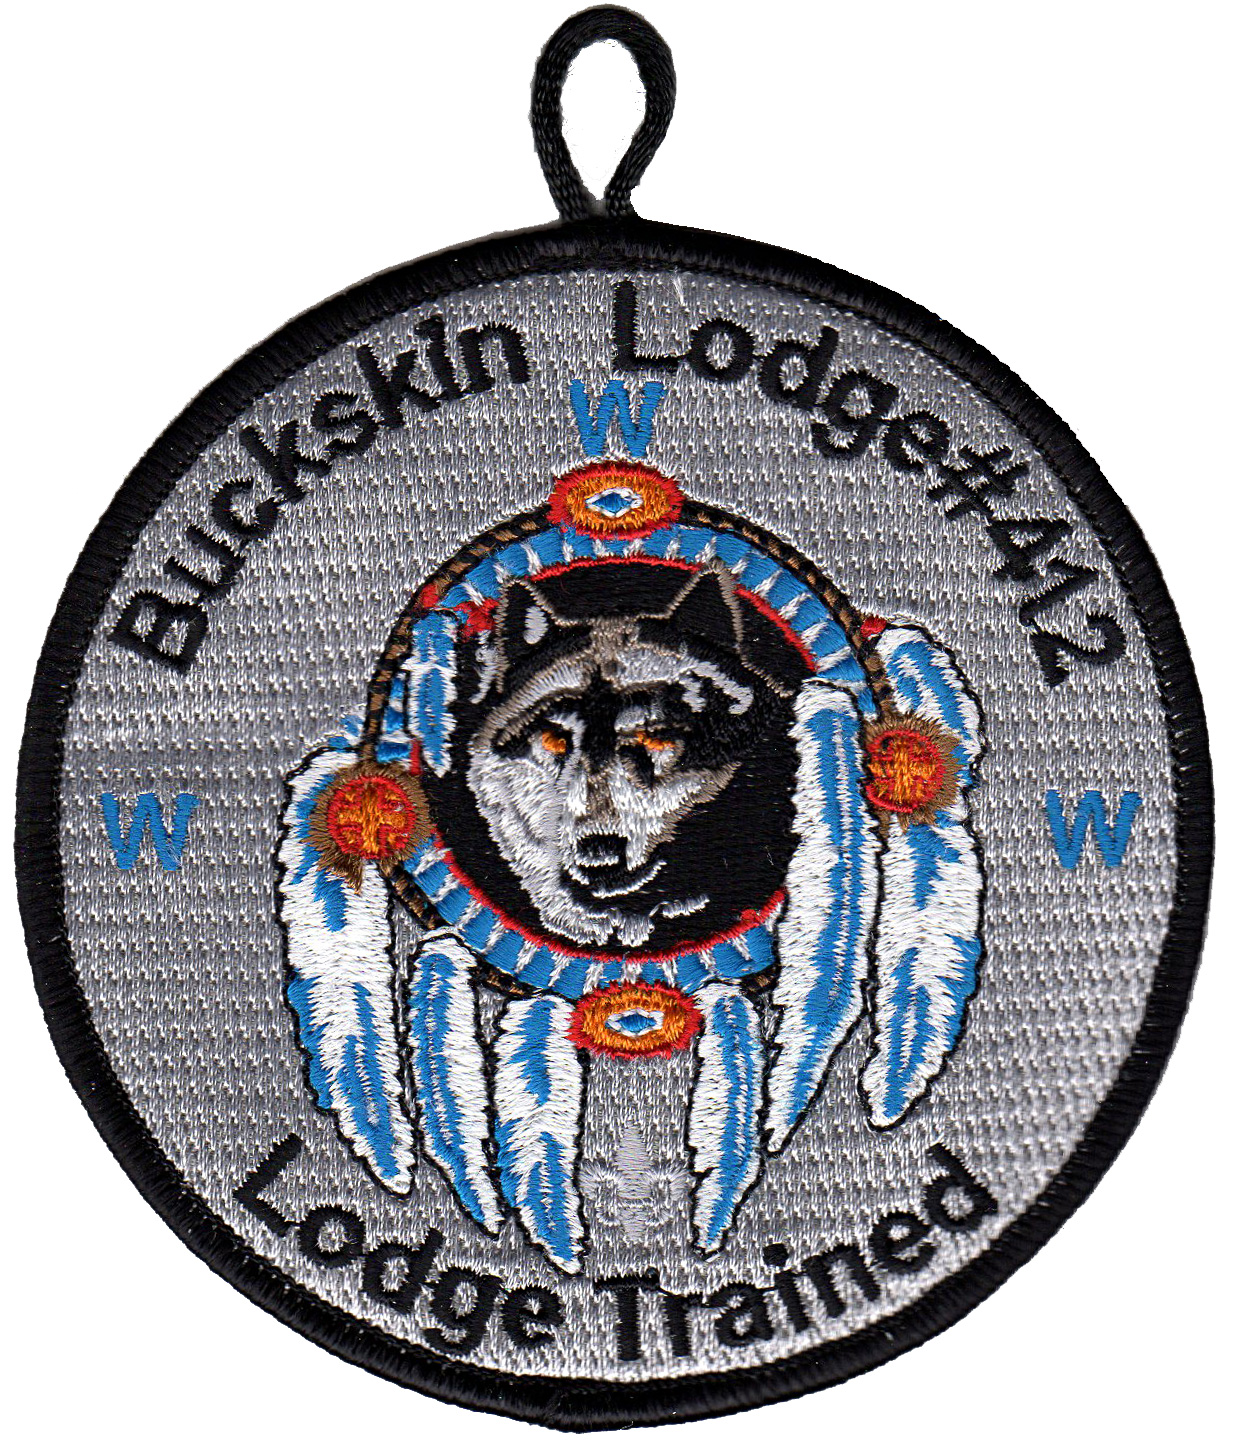 Lodge Trained - Black border